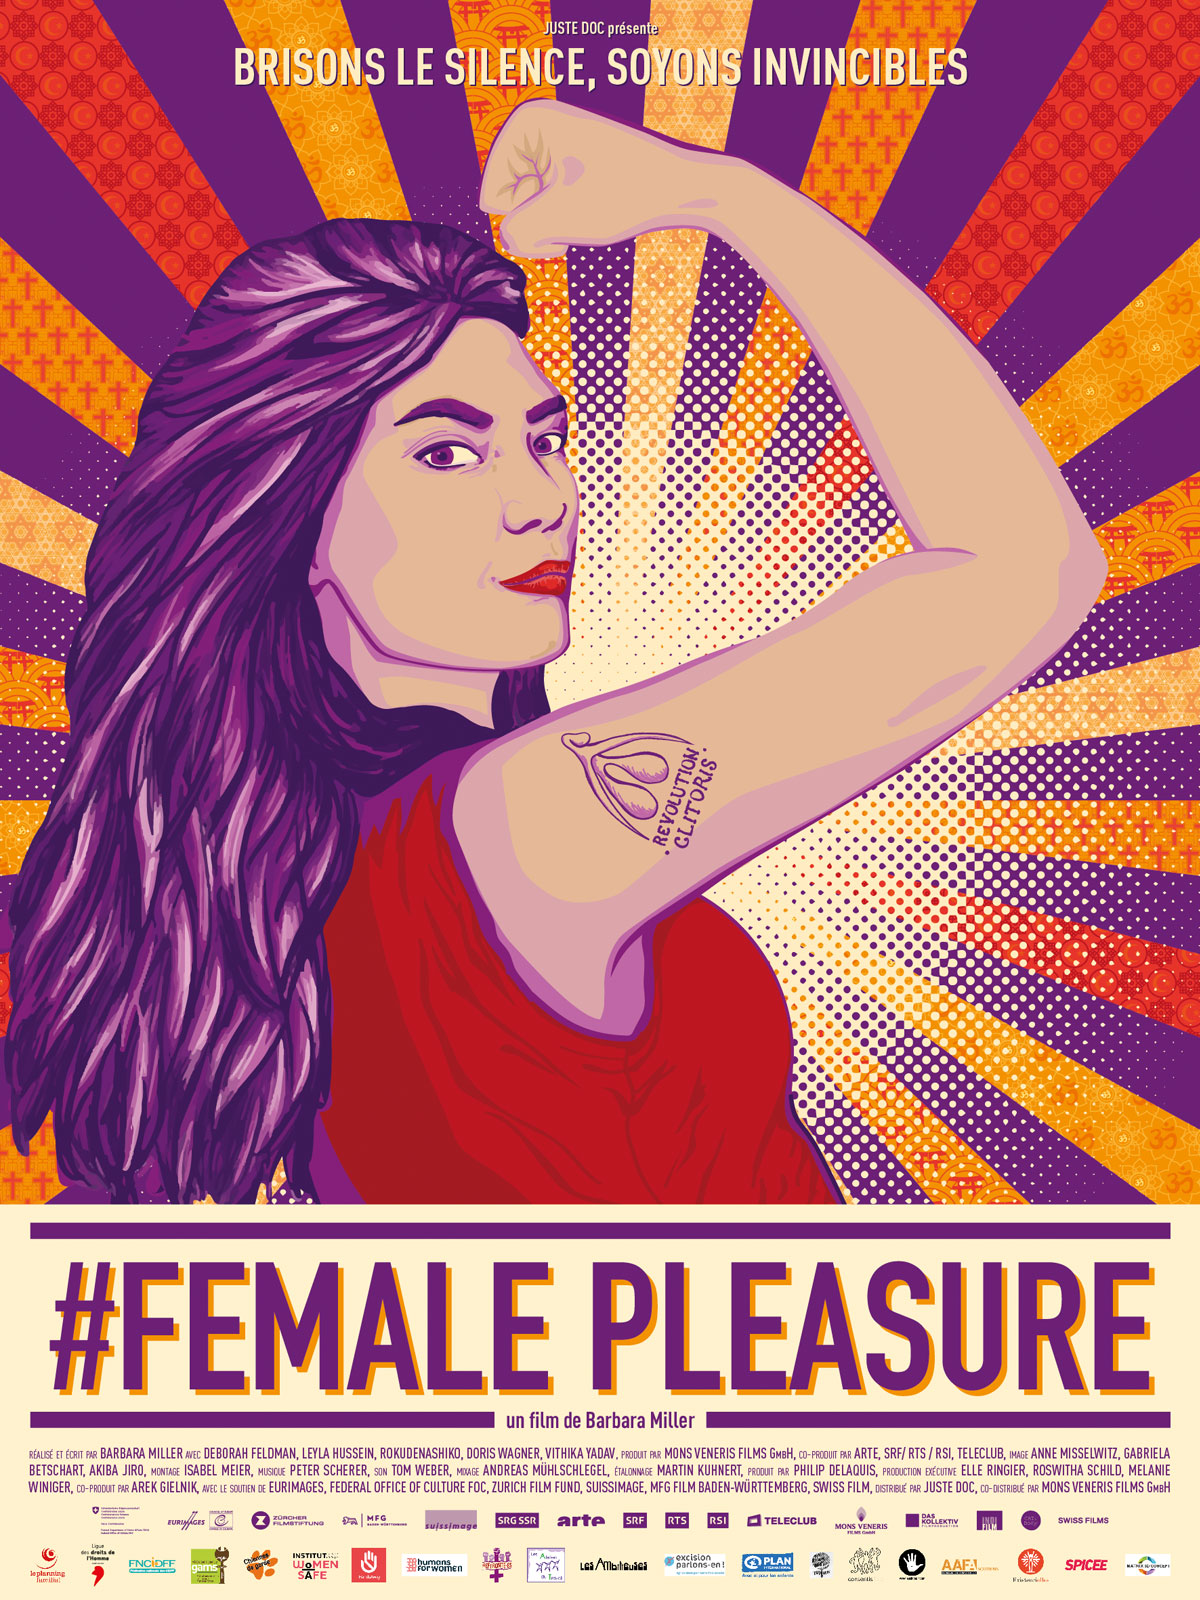 #Female pleasure